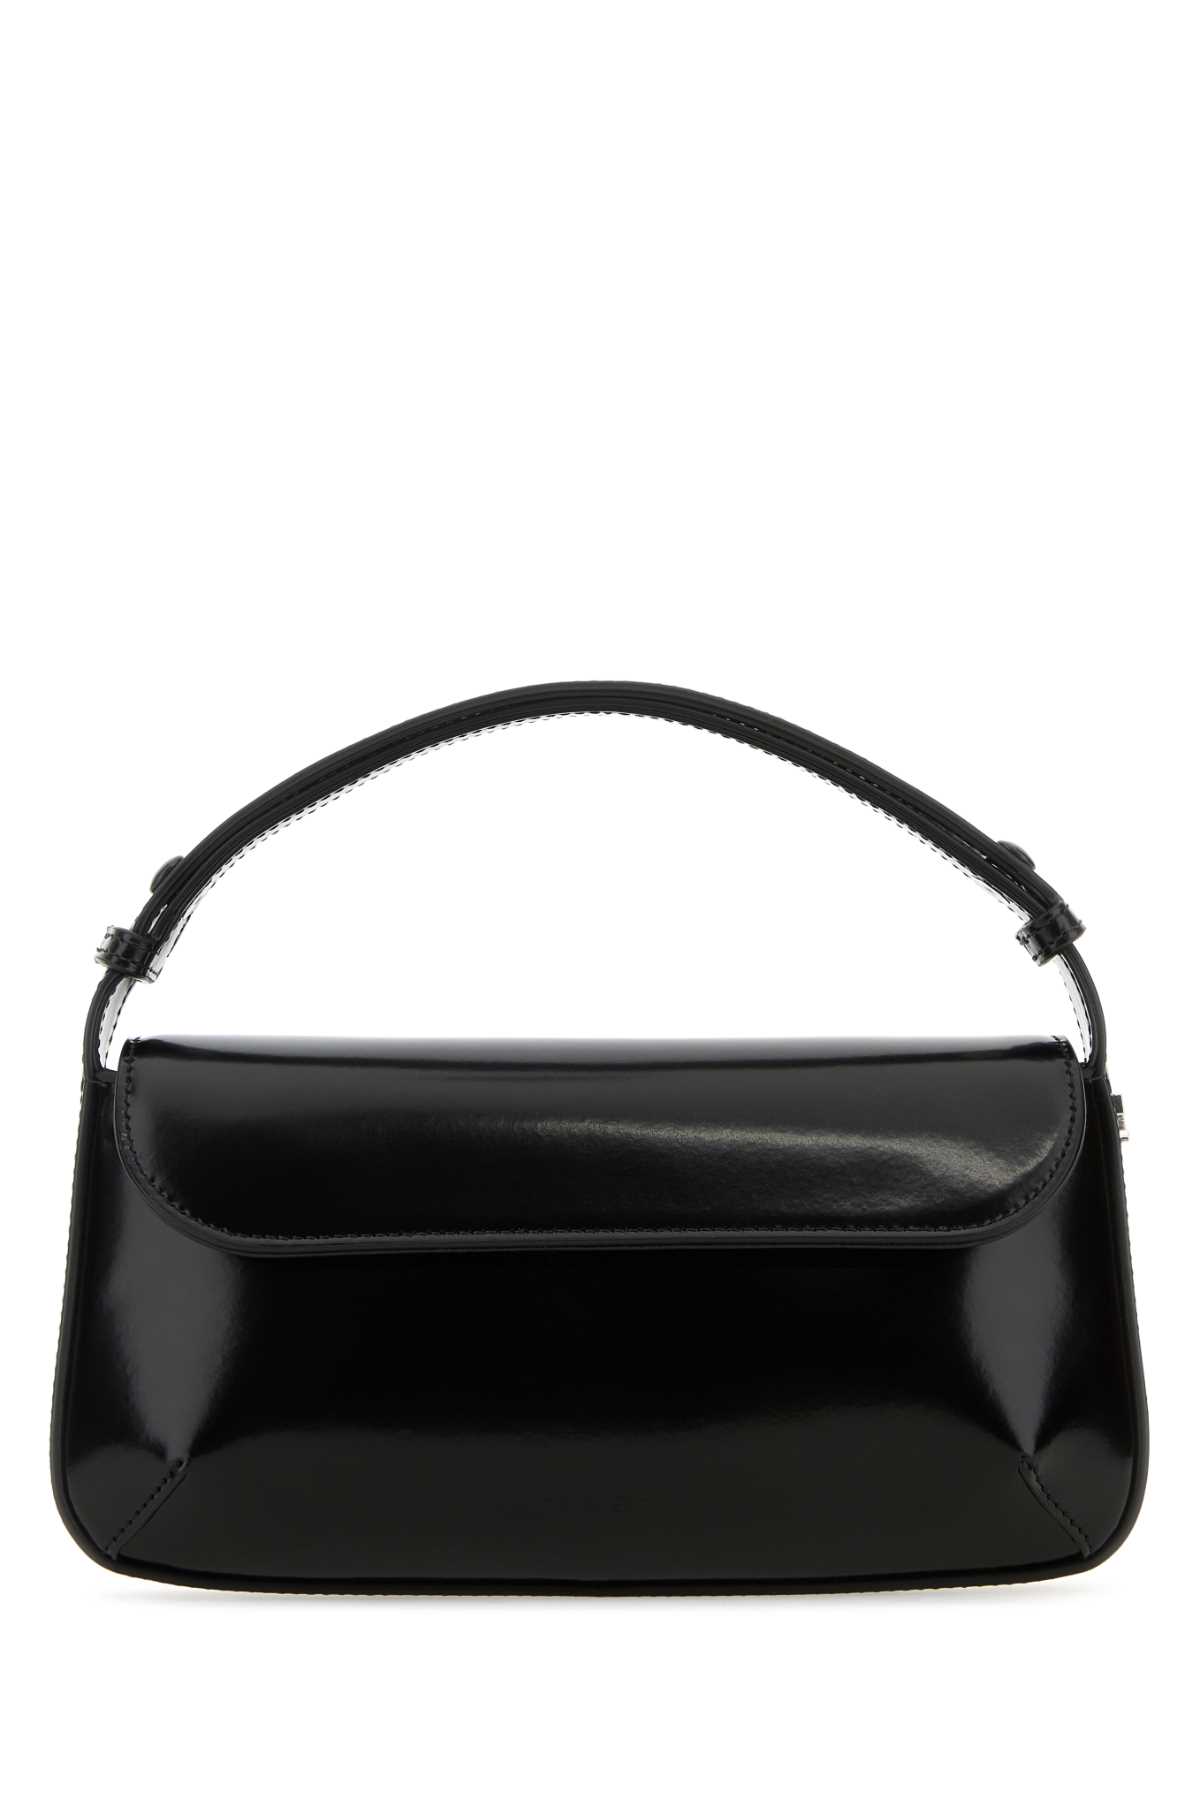 Courrèges Black Leather Sleek Handbag